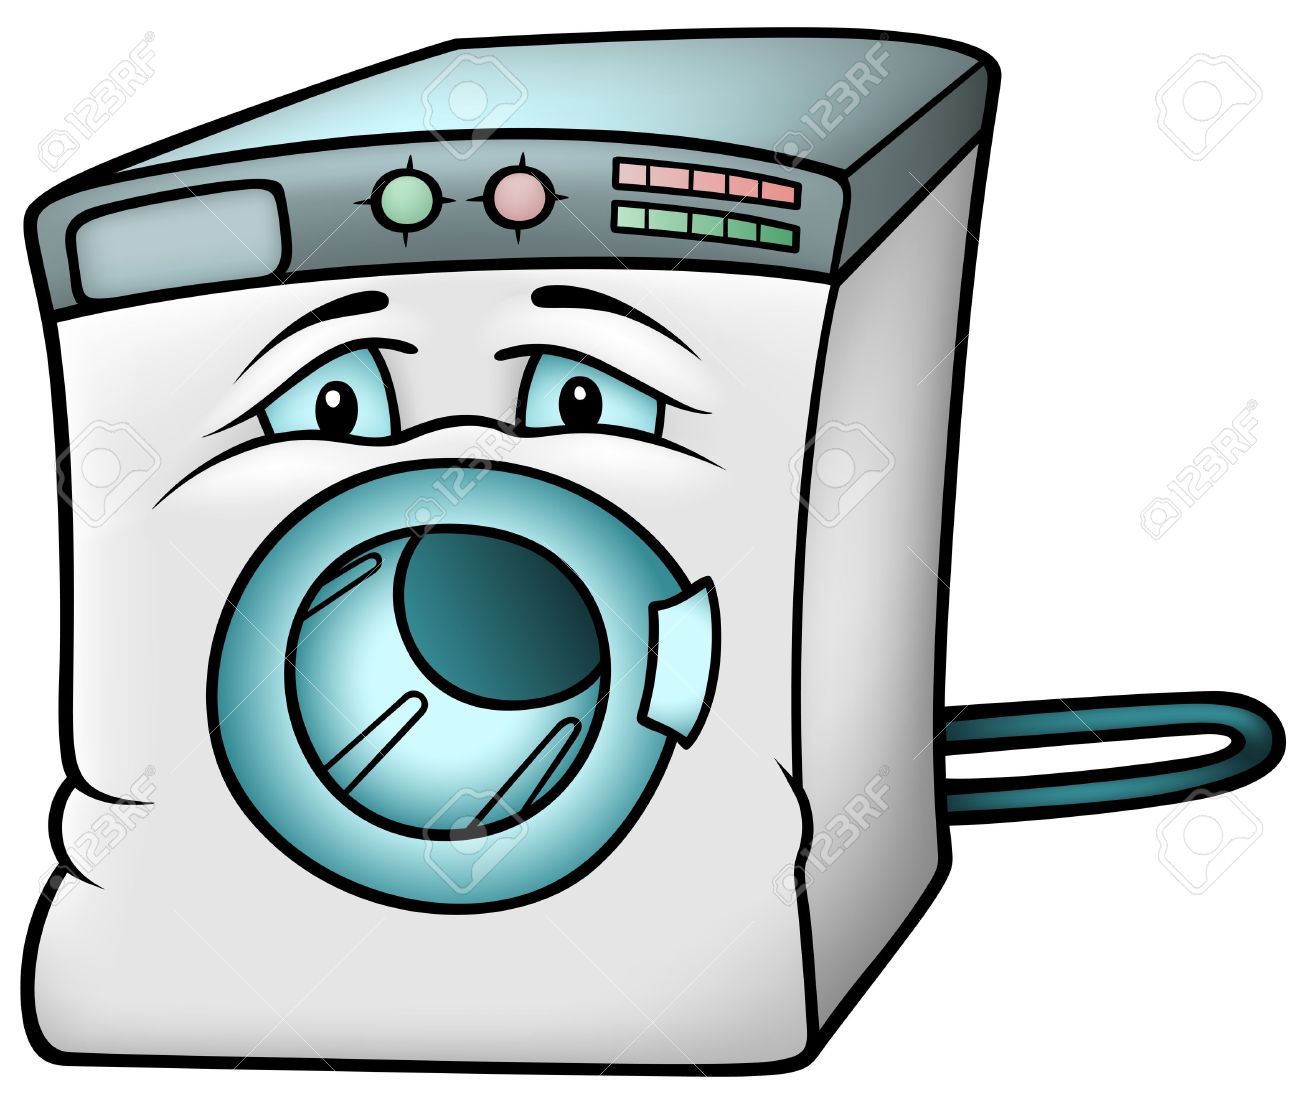 ... Washing machine - Color i